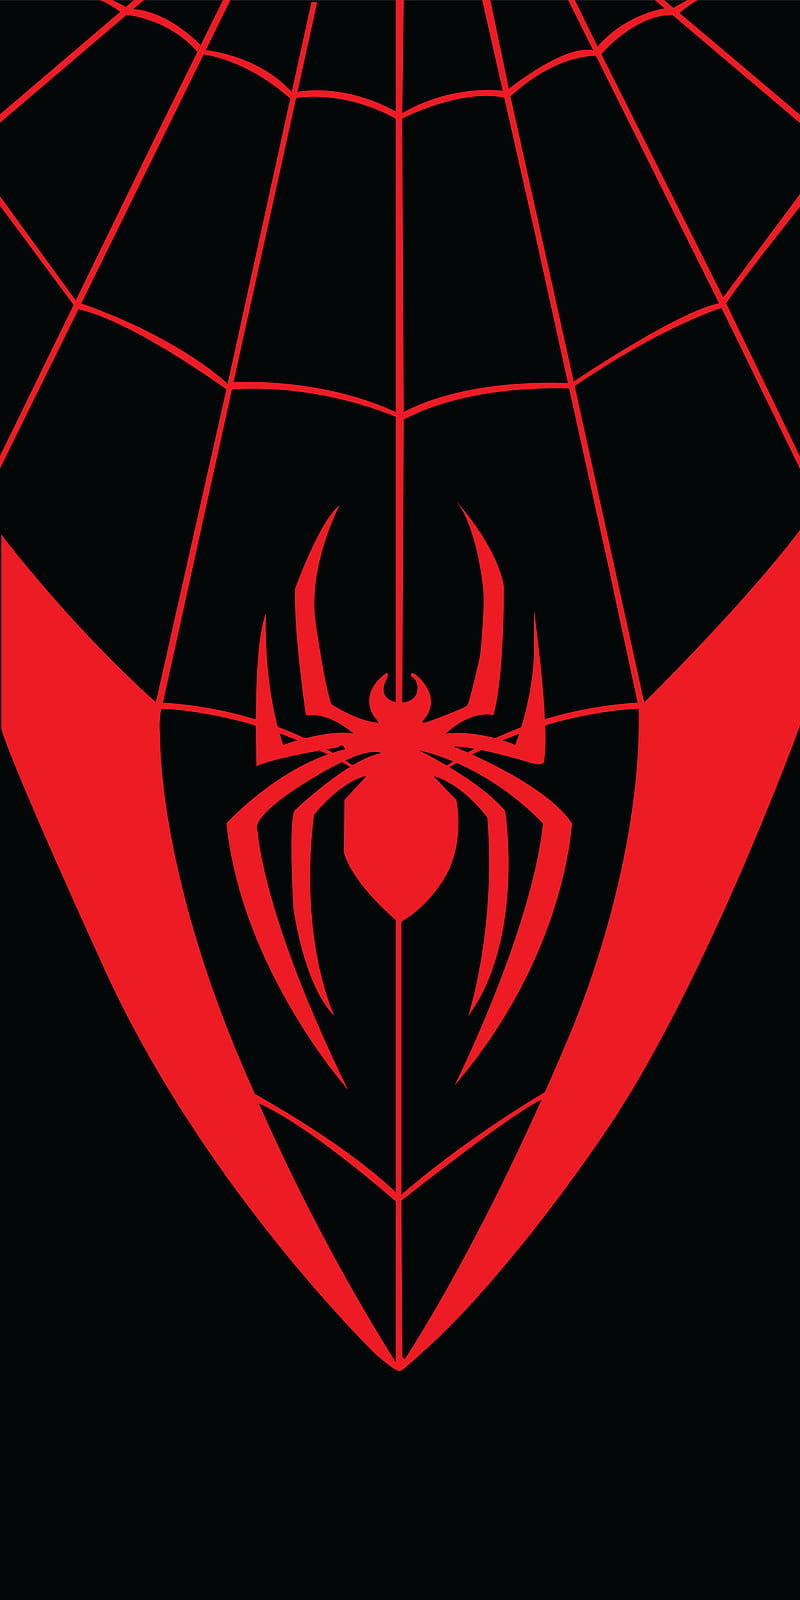 Spider man logo and Miles Morales logo by 11sree on DeviantArt